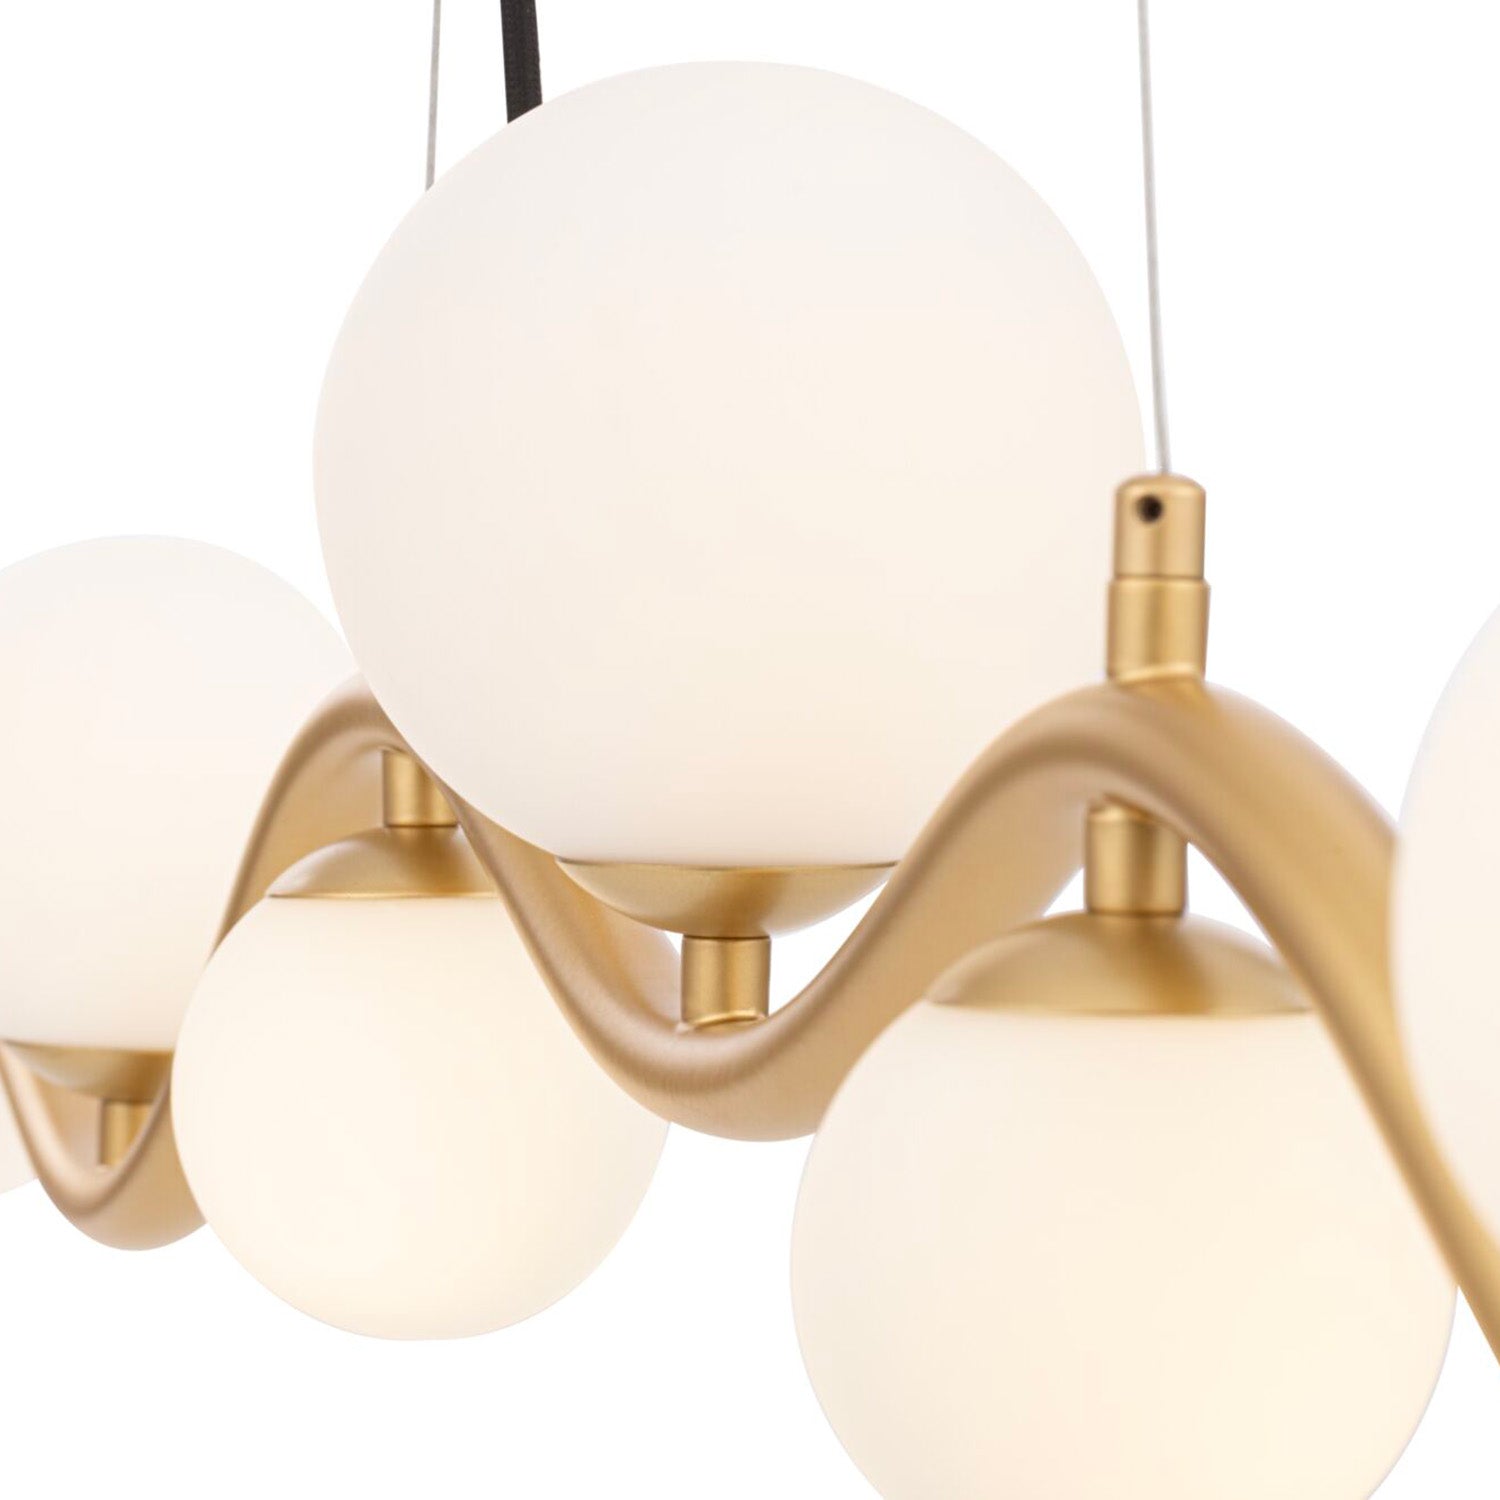 UVA - Gold wavy art deco chandelier, designer glass balls